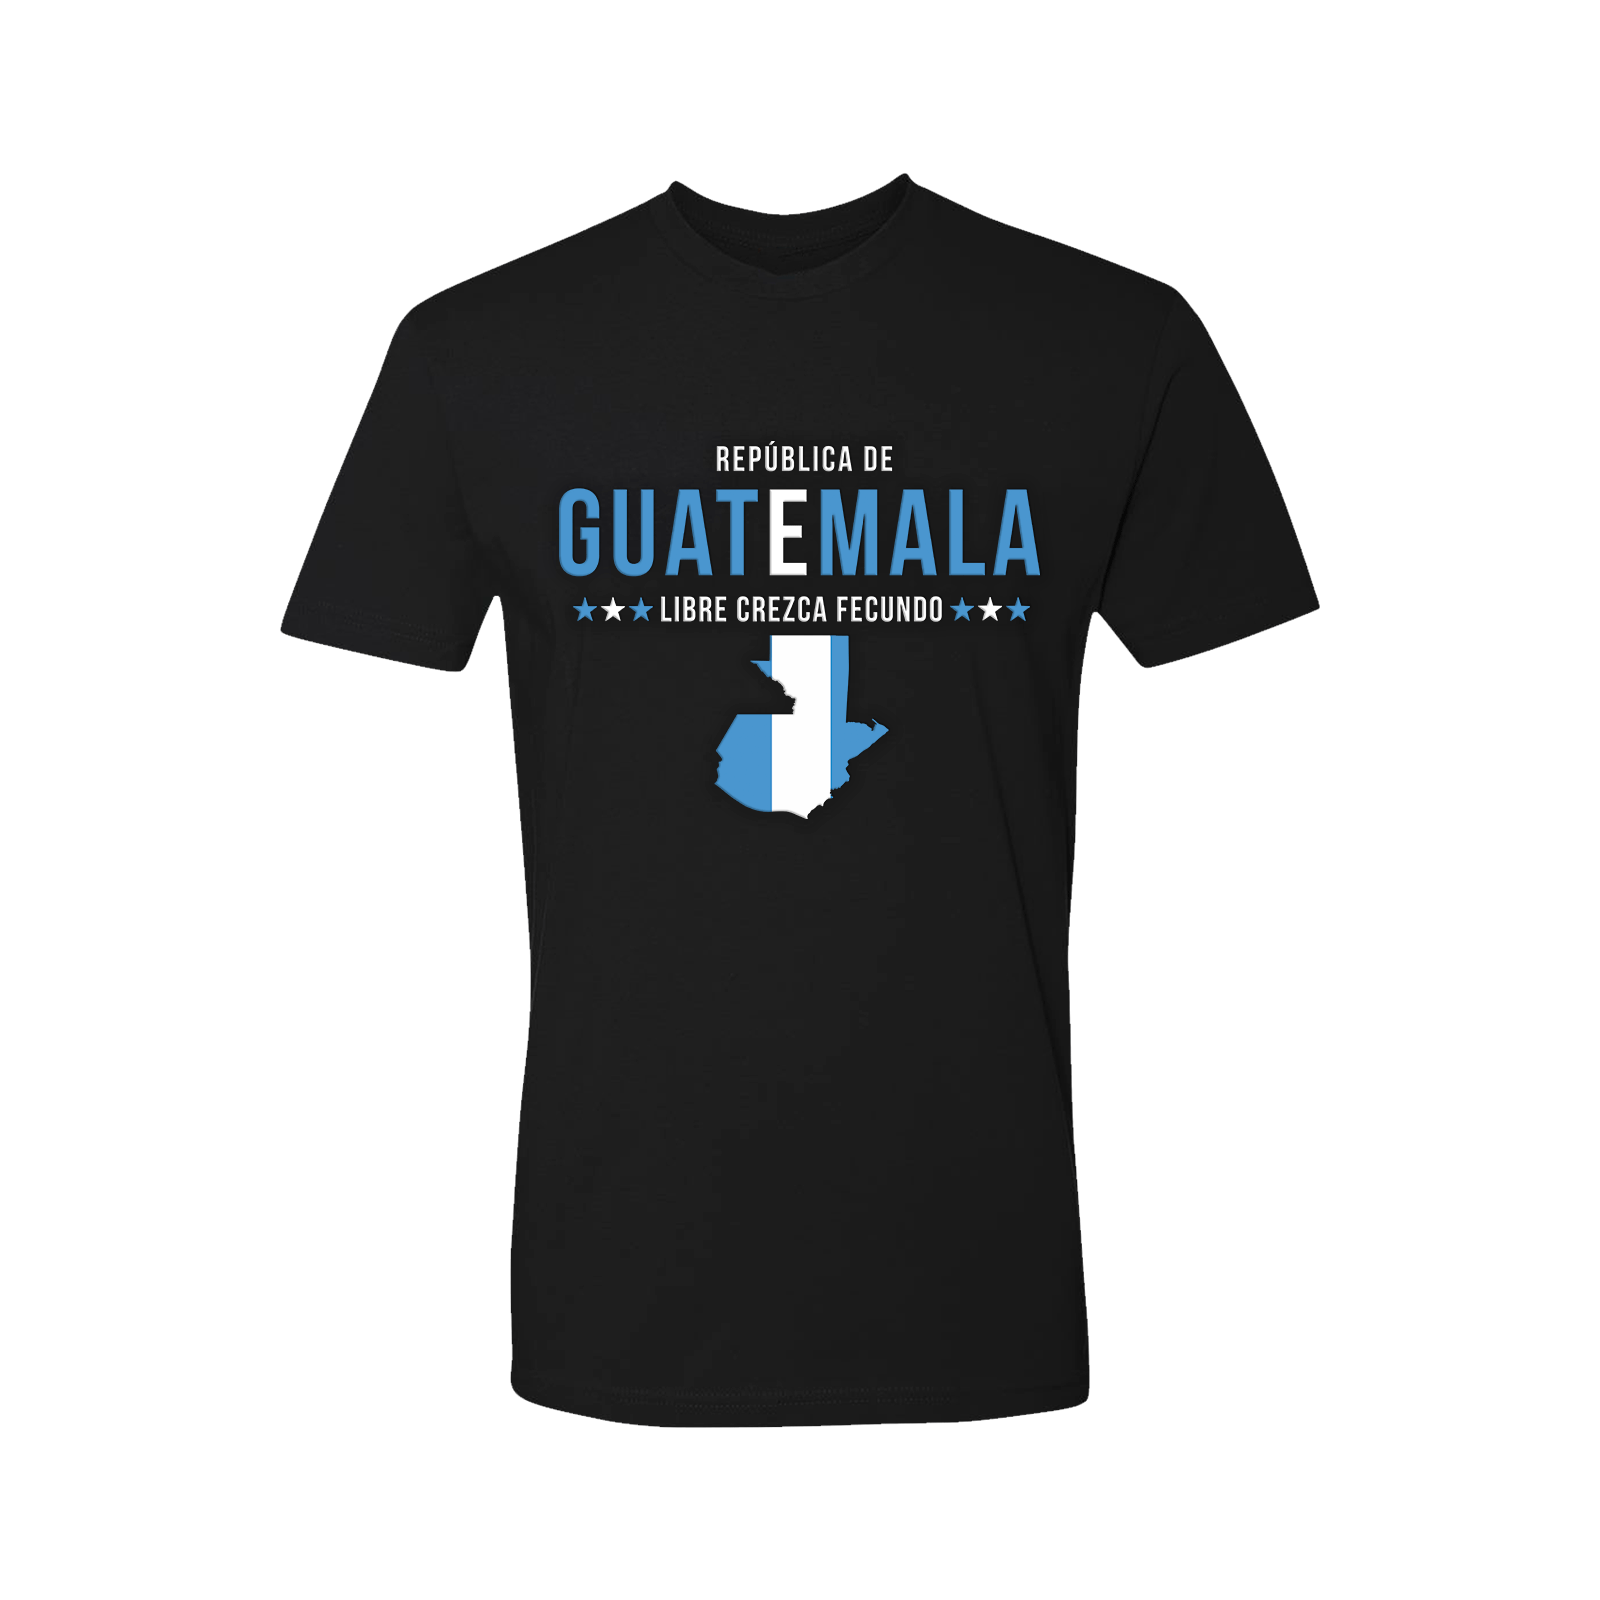 Guatemala Short Sleeve Shirt - Adult